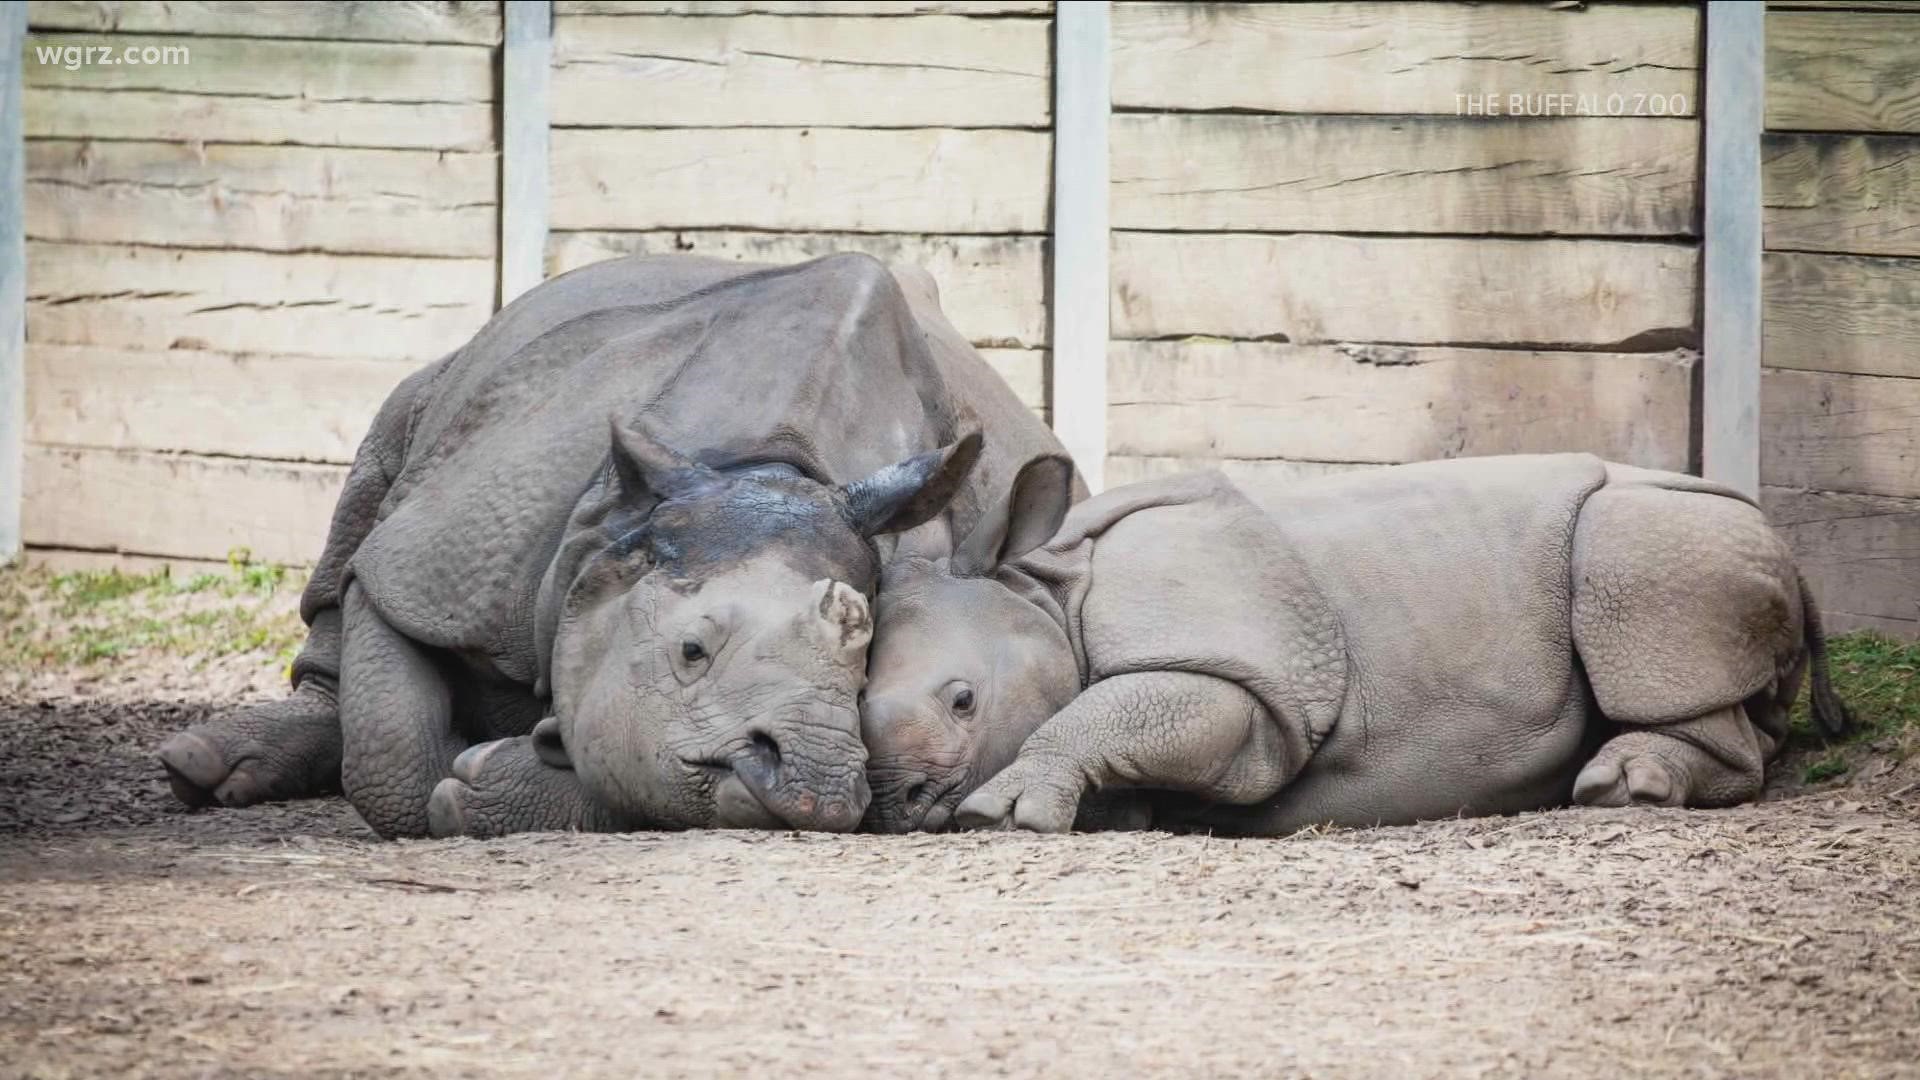 Some rhino cuddles to make Monday better